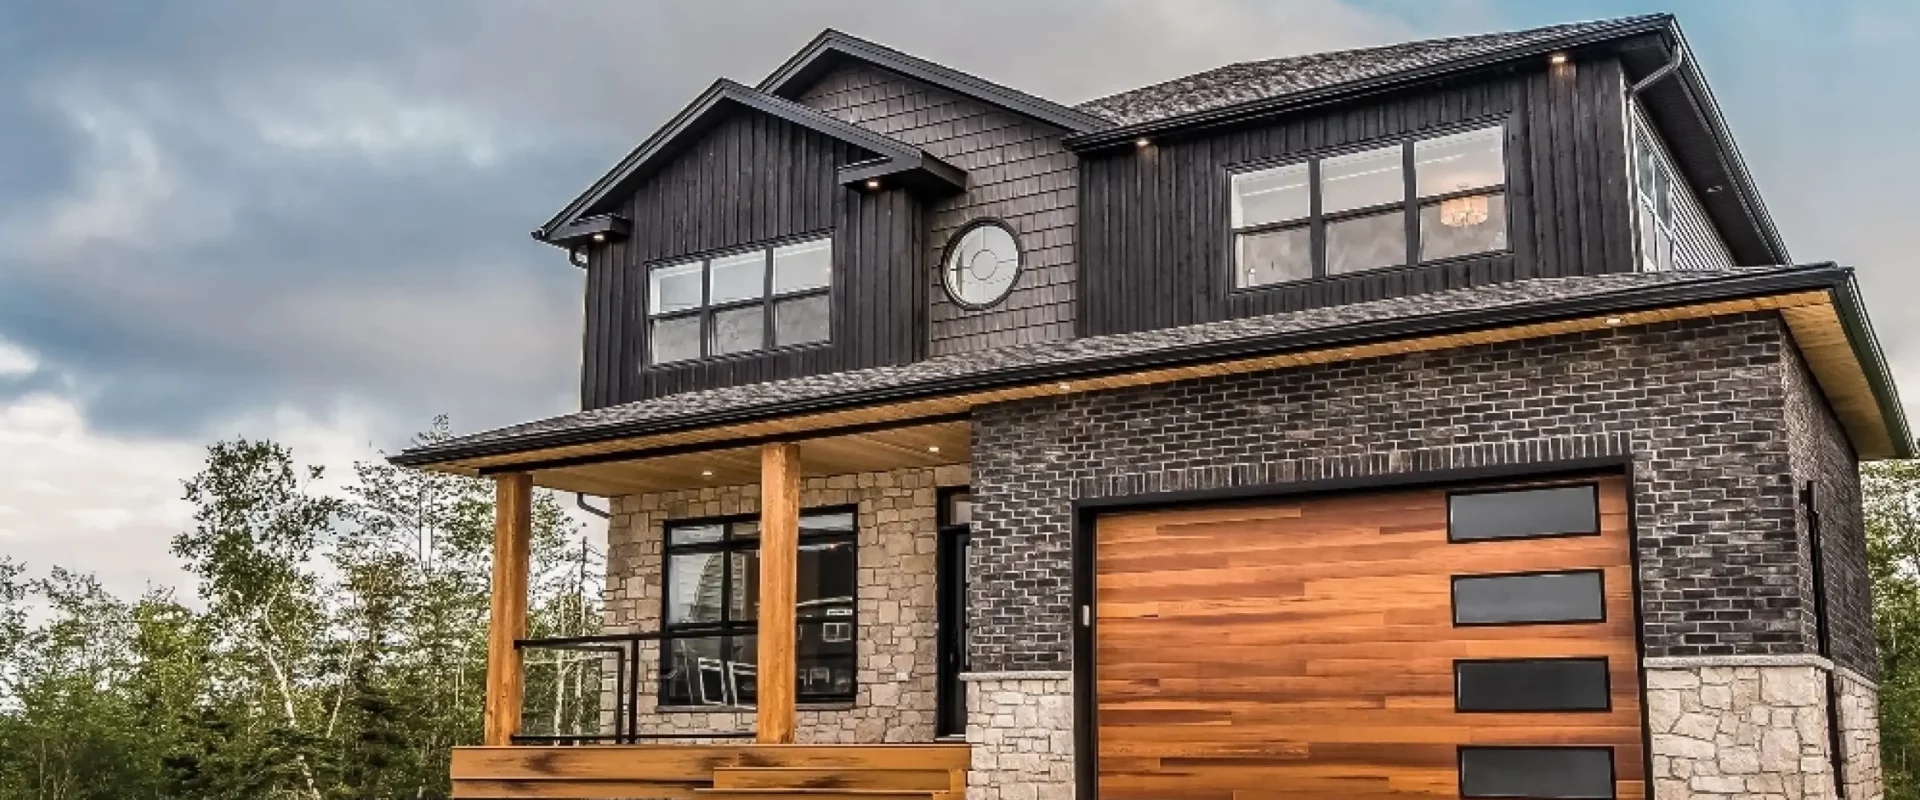 modern house with wooden garage door finish jeffersonville in